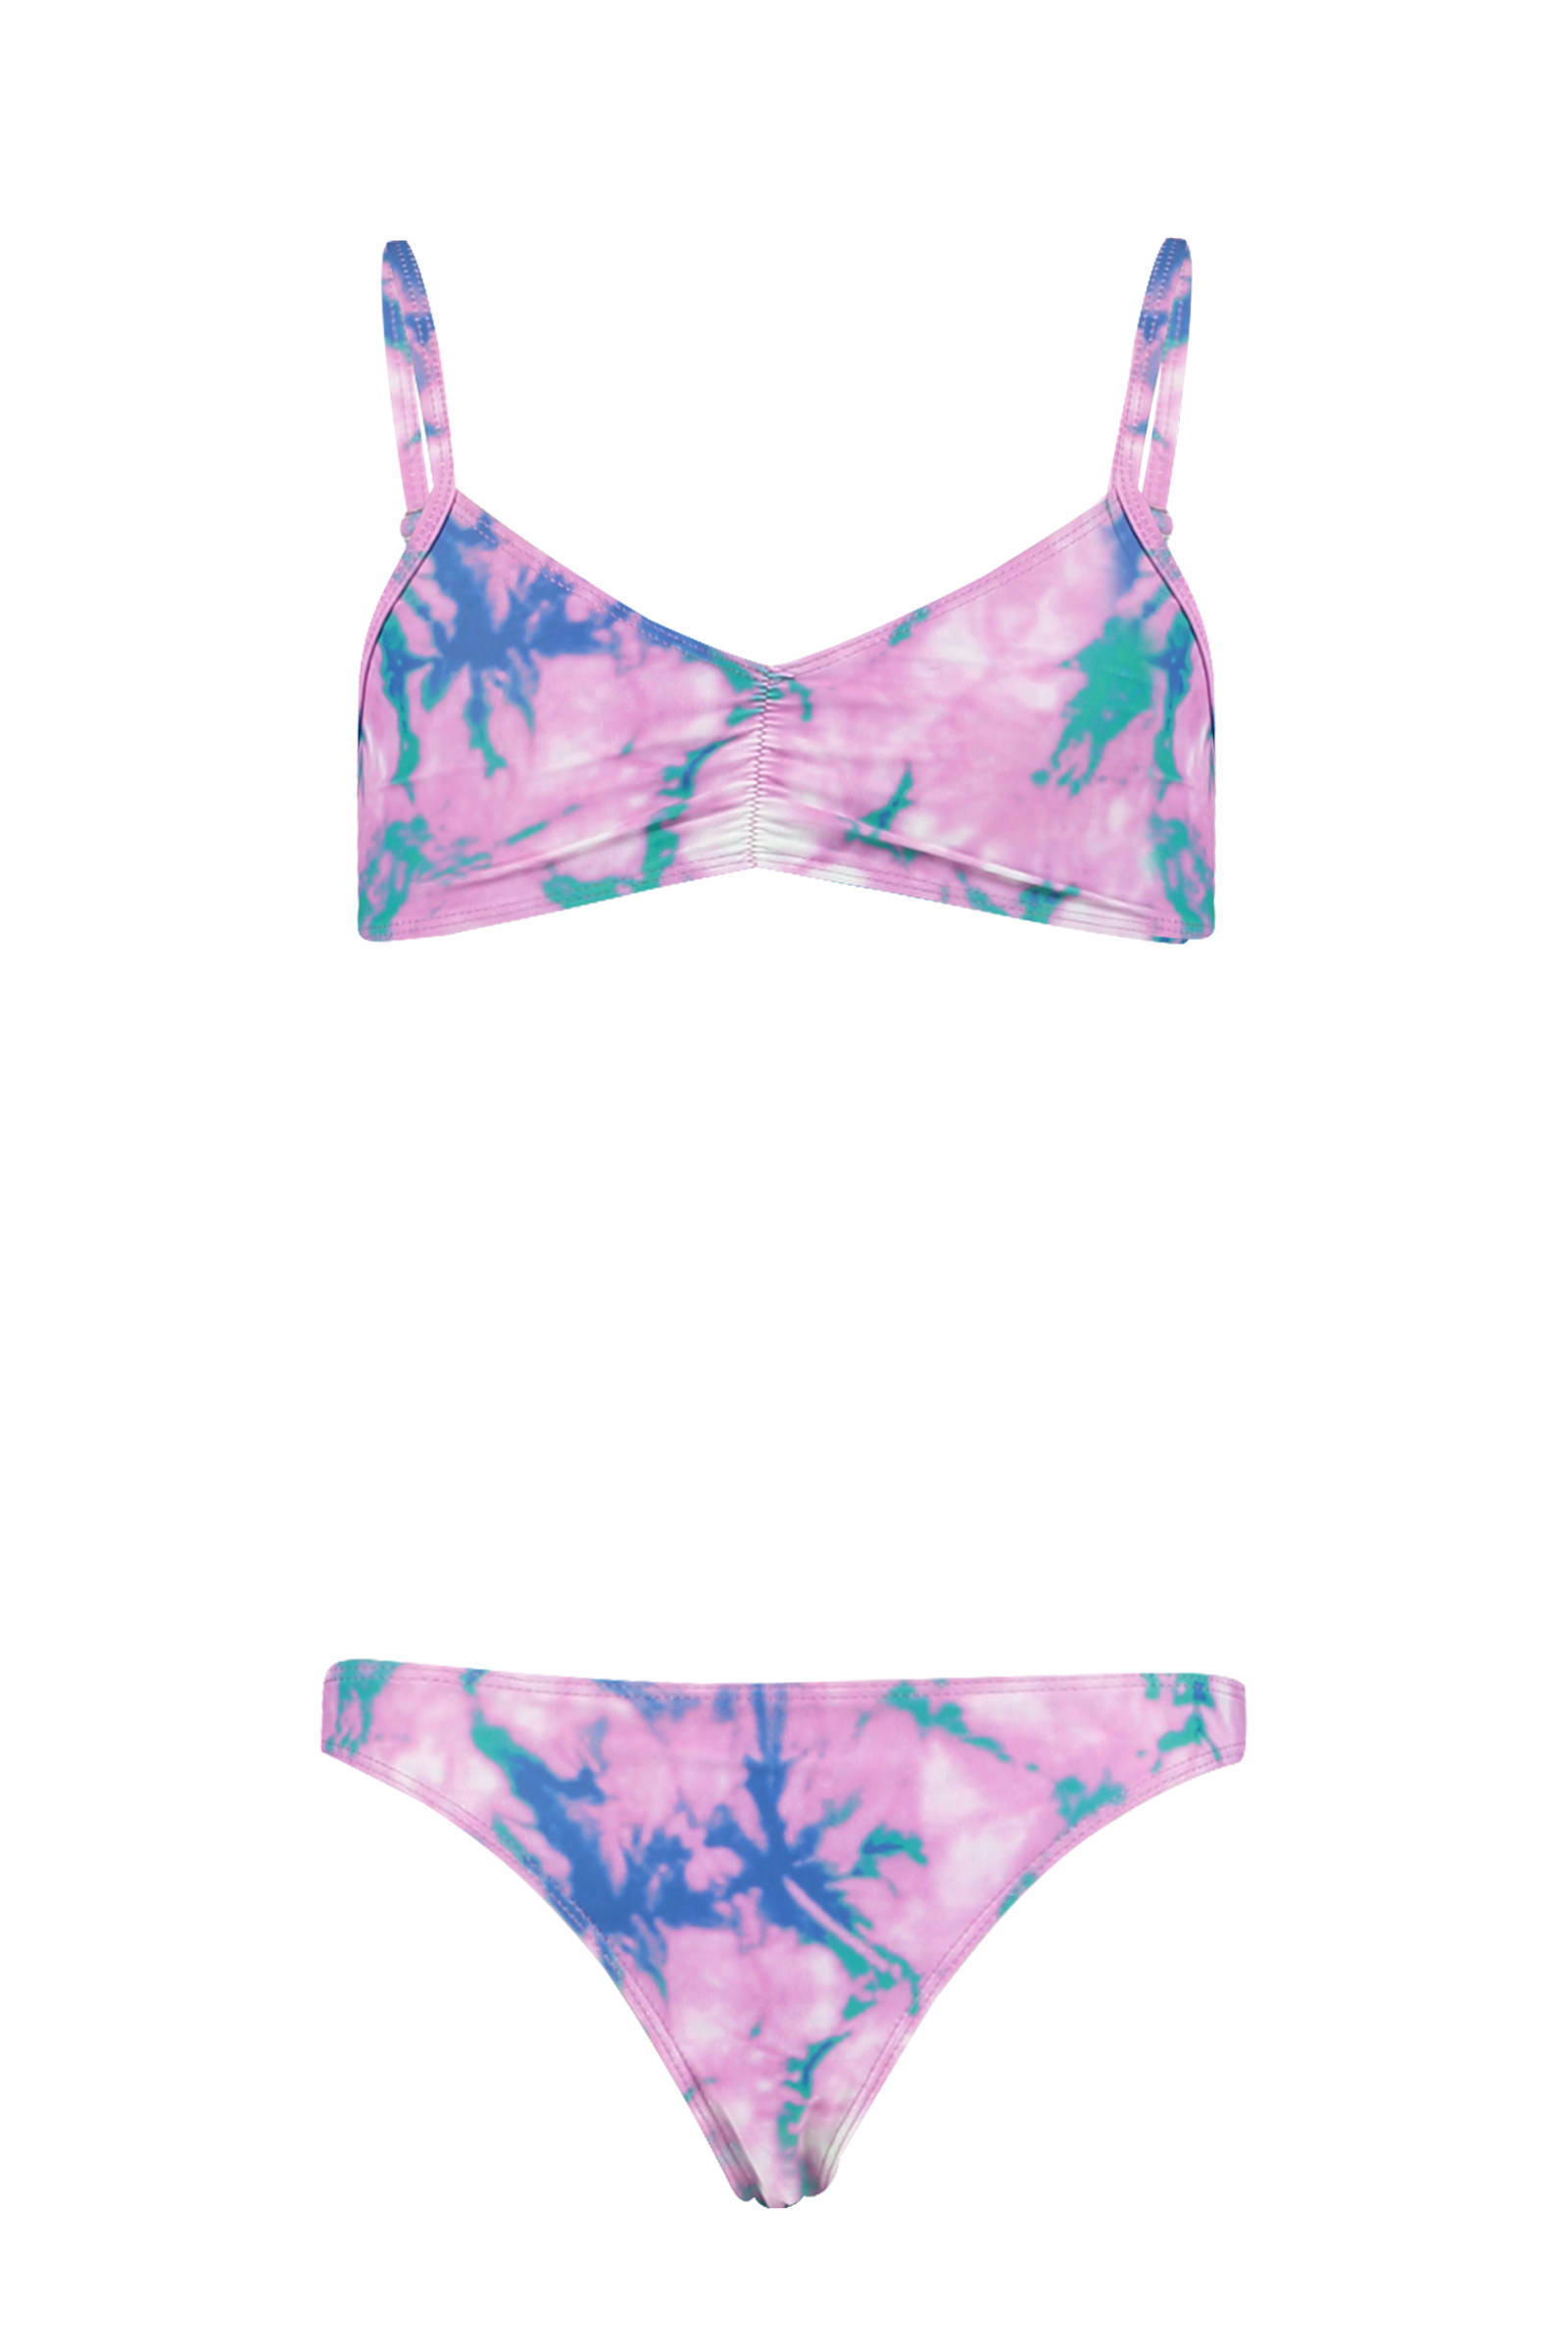 America Today Junior tie dye bikini Leona JR roze/blauw online kopen